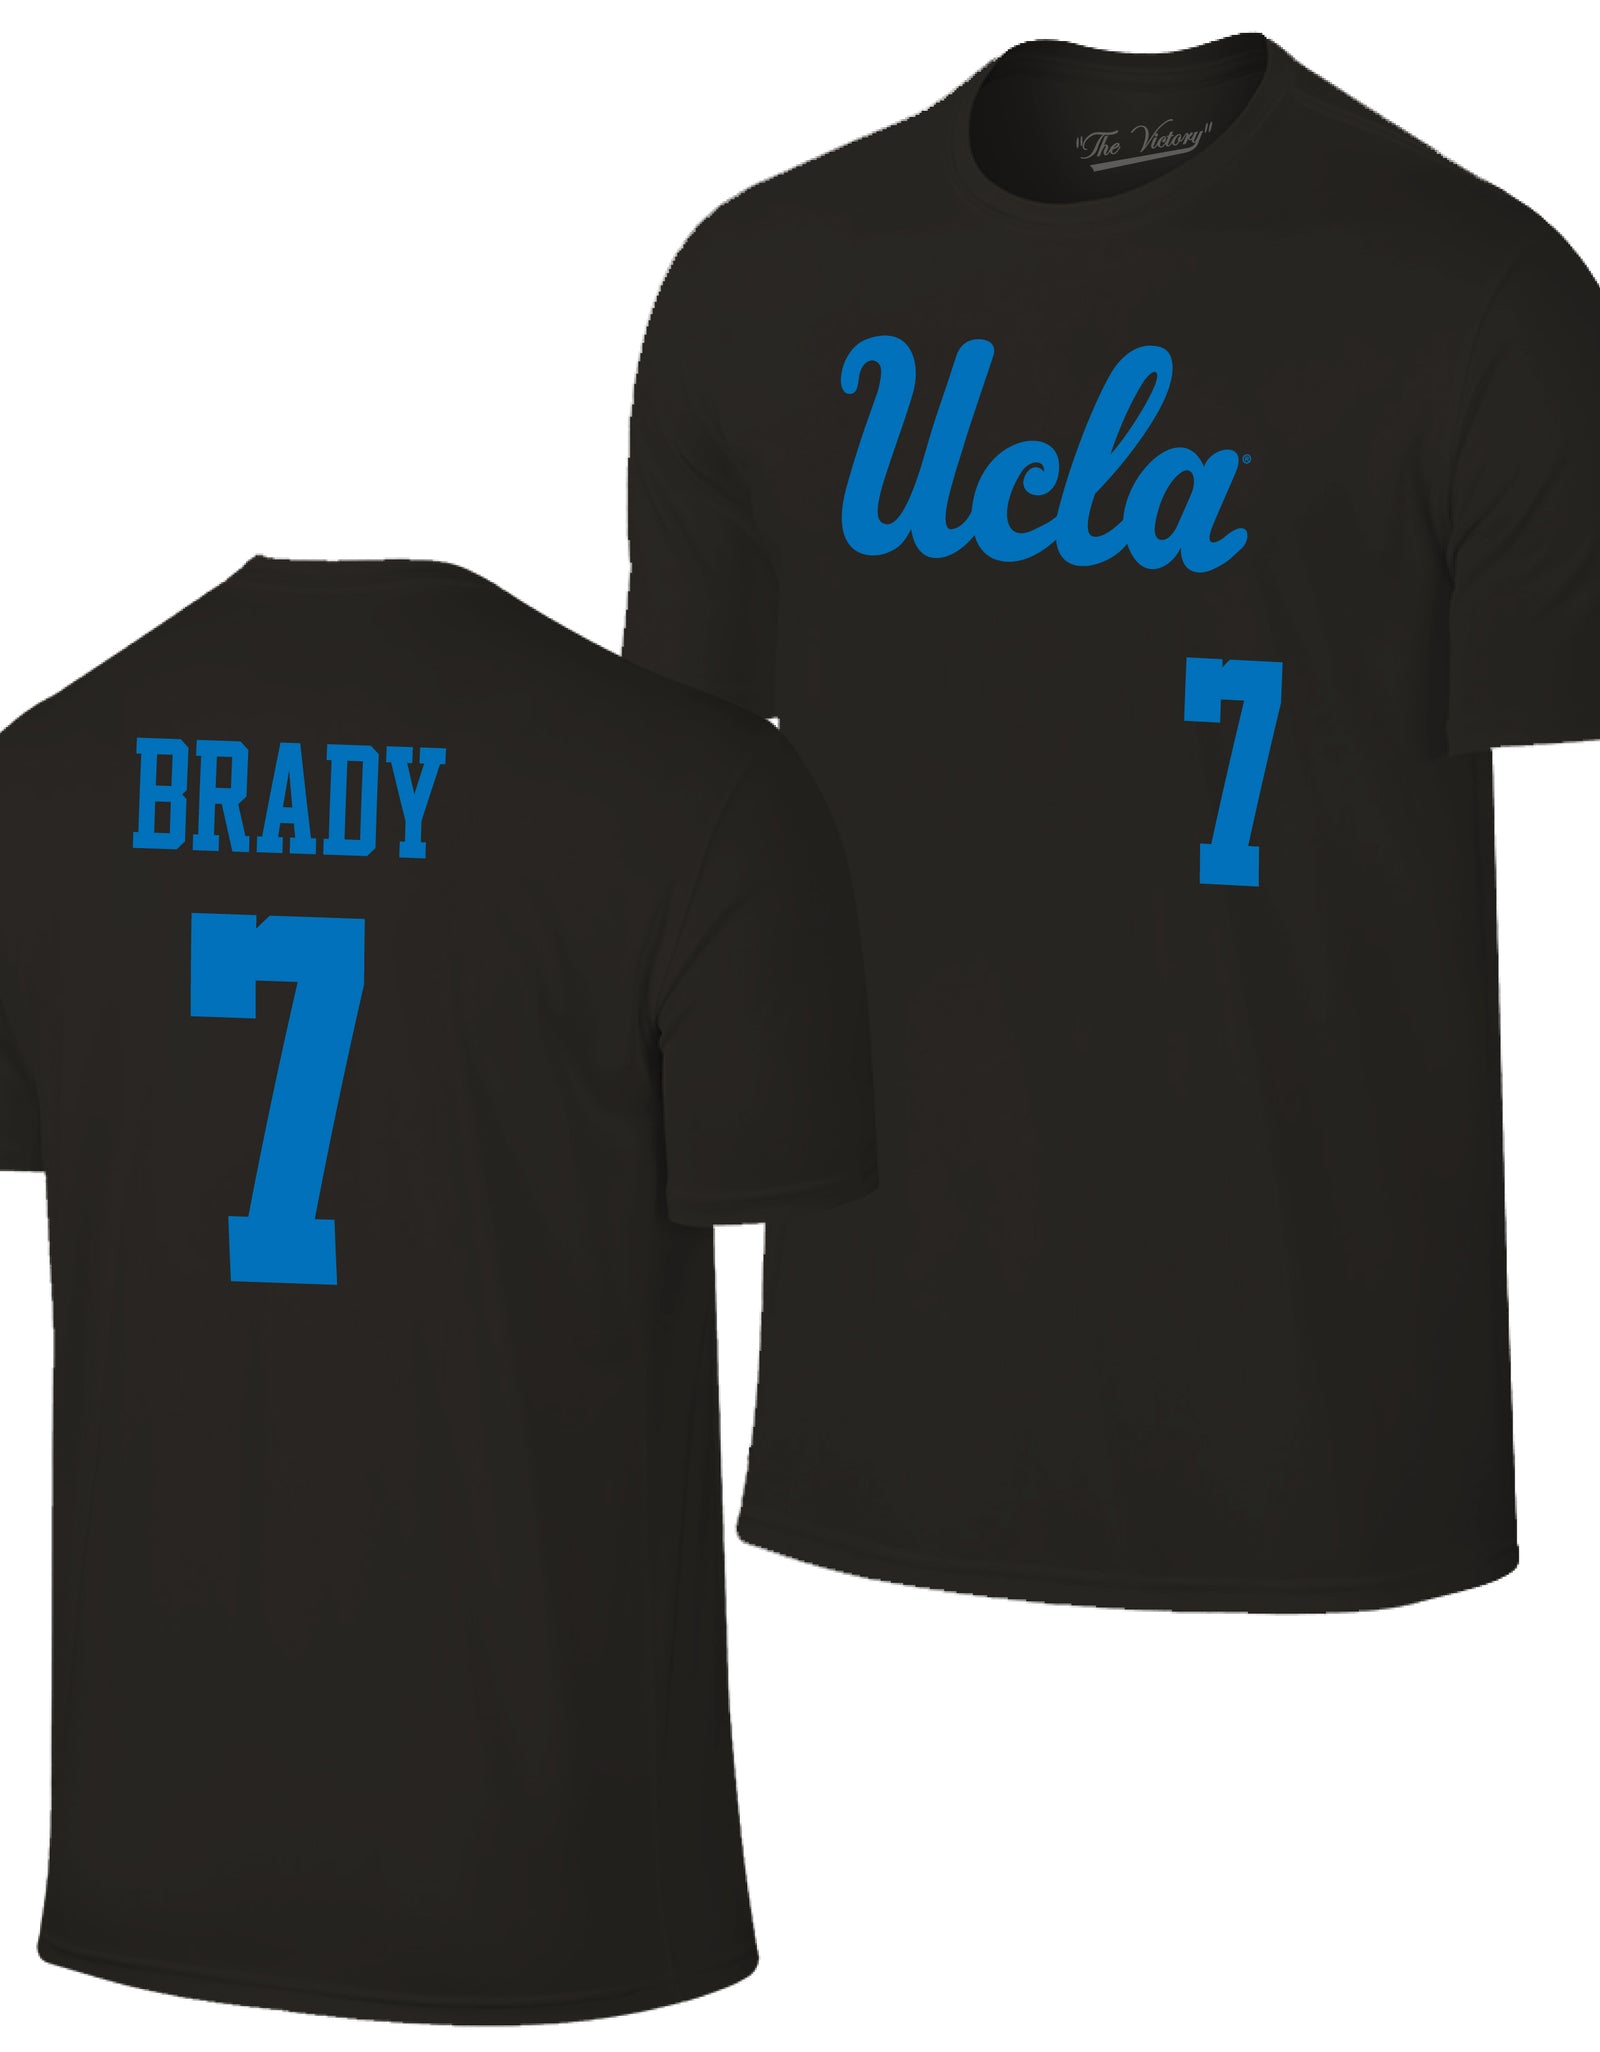 UCLA Bruins Maya Brady Jersey Tee